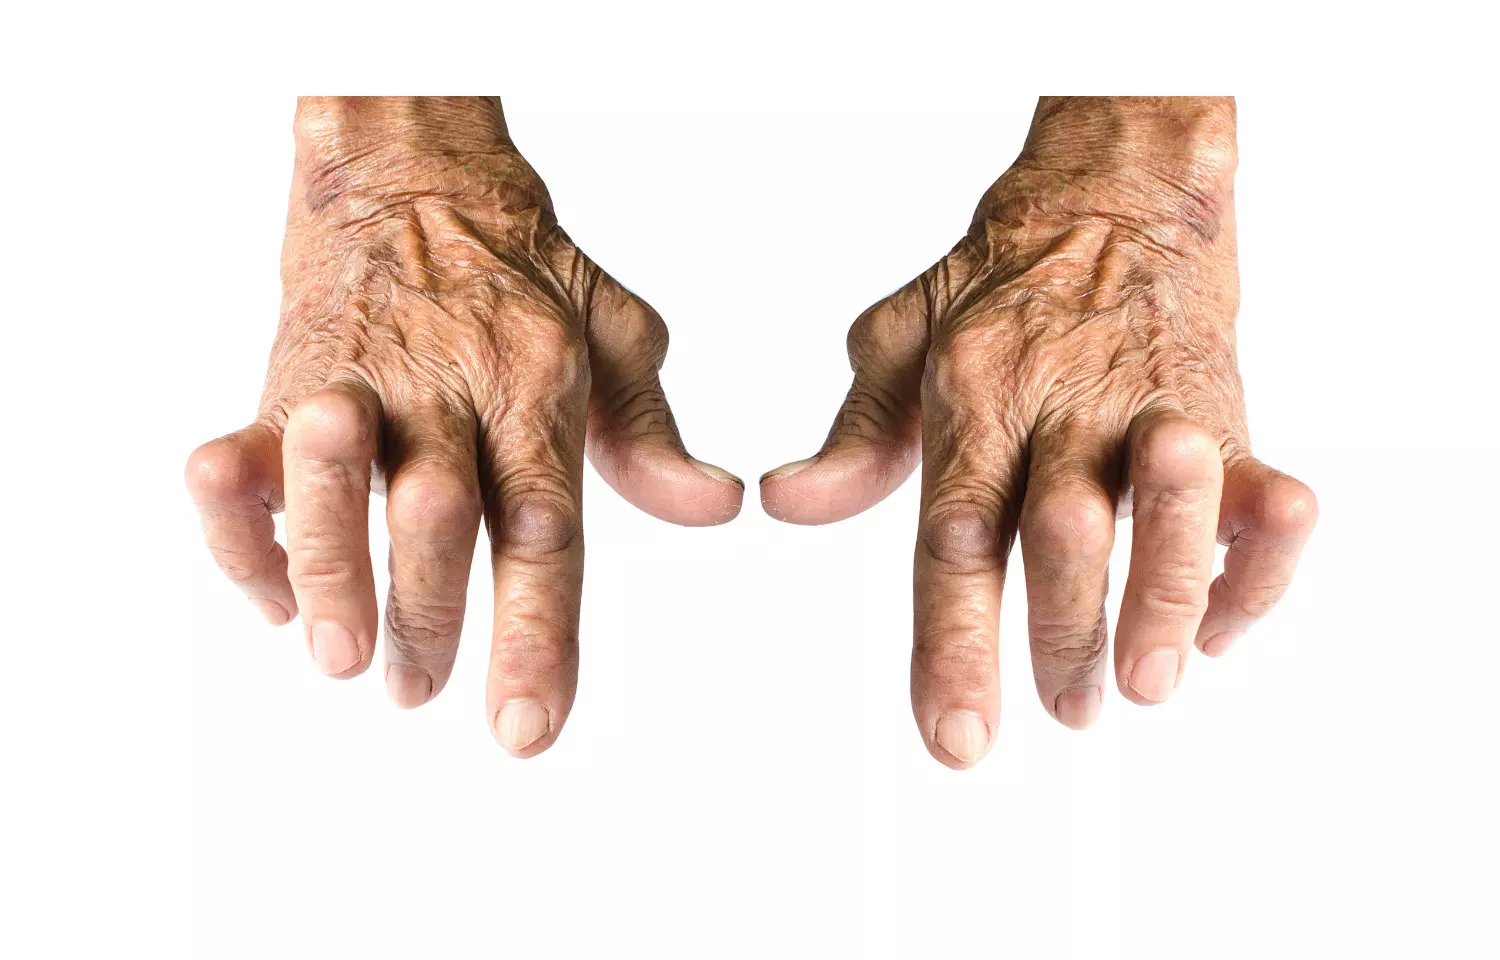 Exercise reduces sarcopenia in rheumatoid arthritis patients, reveals study